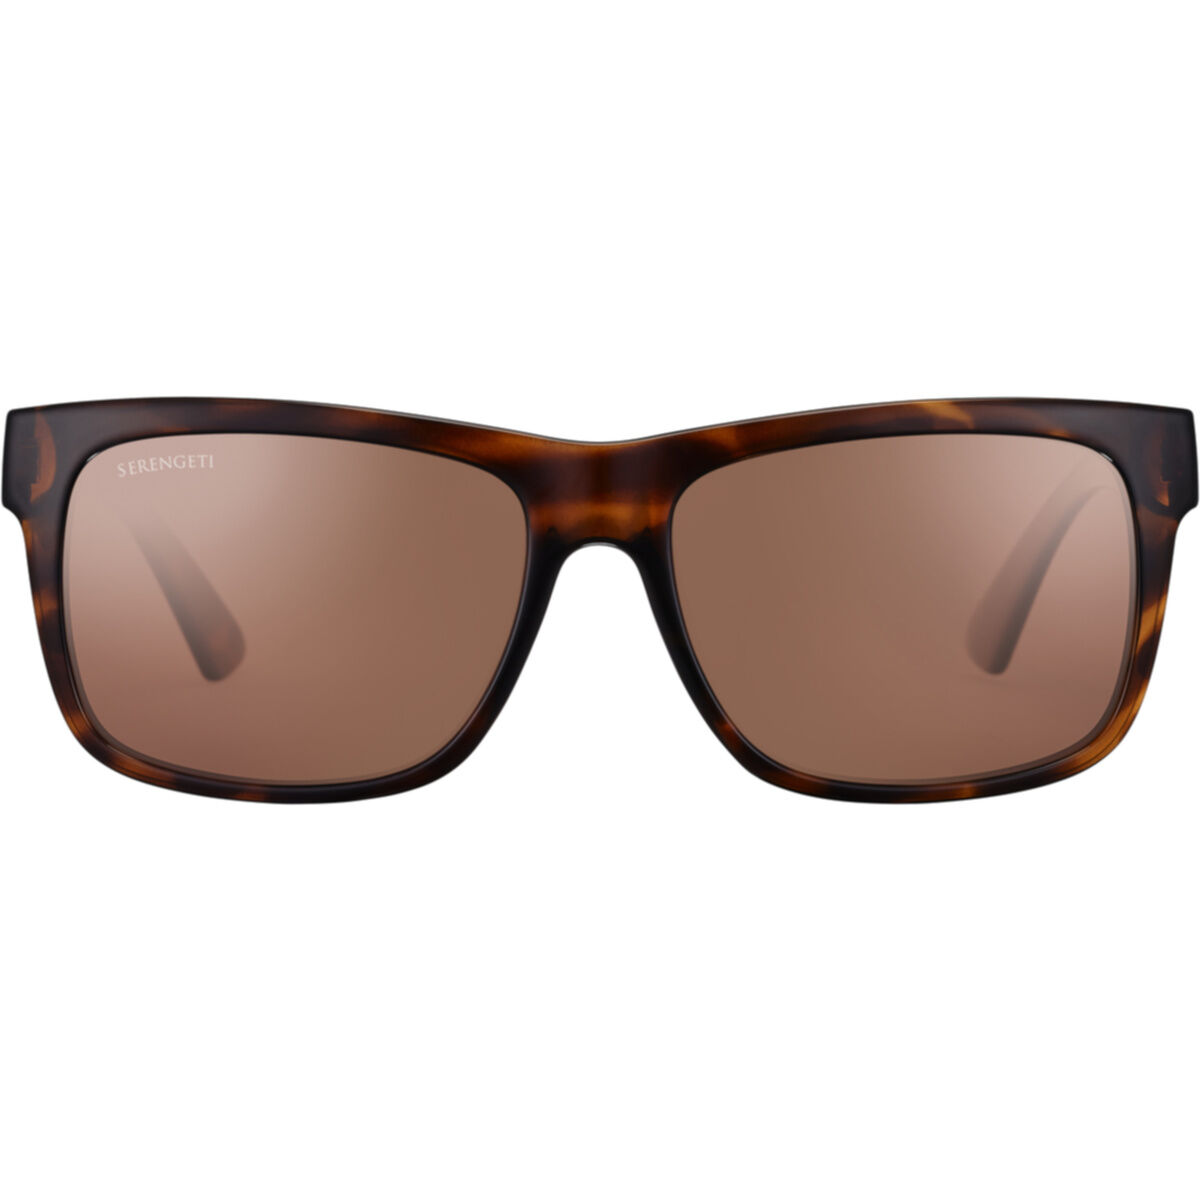 Serengeti POSITANO Matte Black/Sedona Polarized one size fits all unisex Sunglasses 